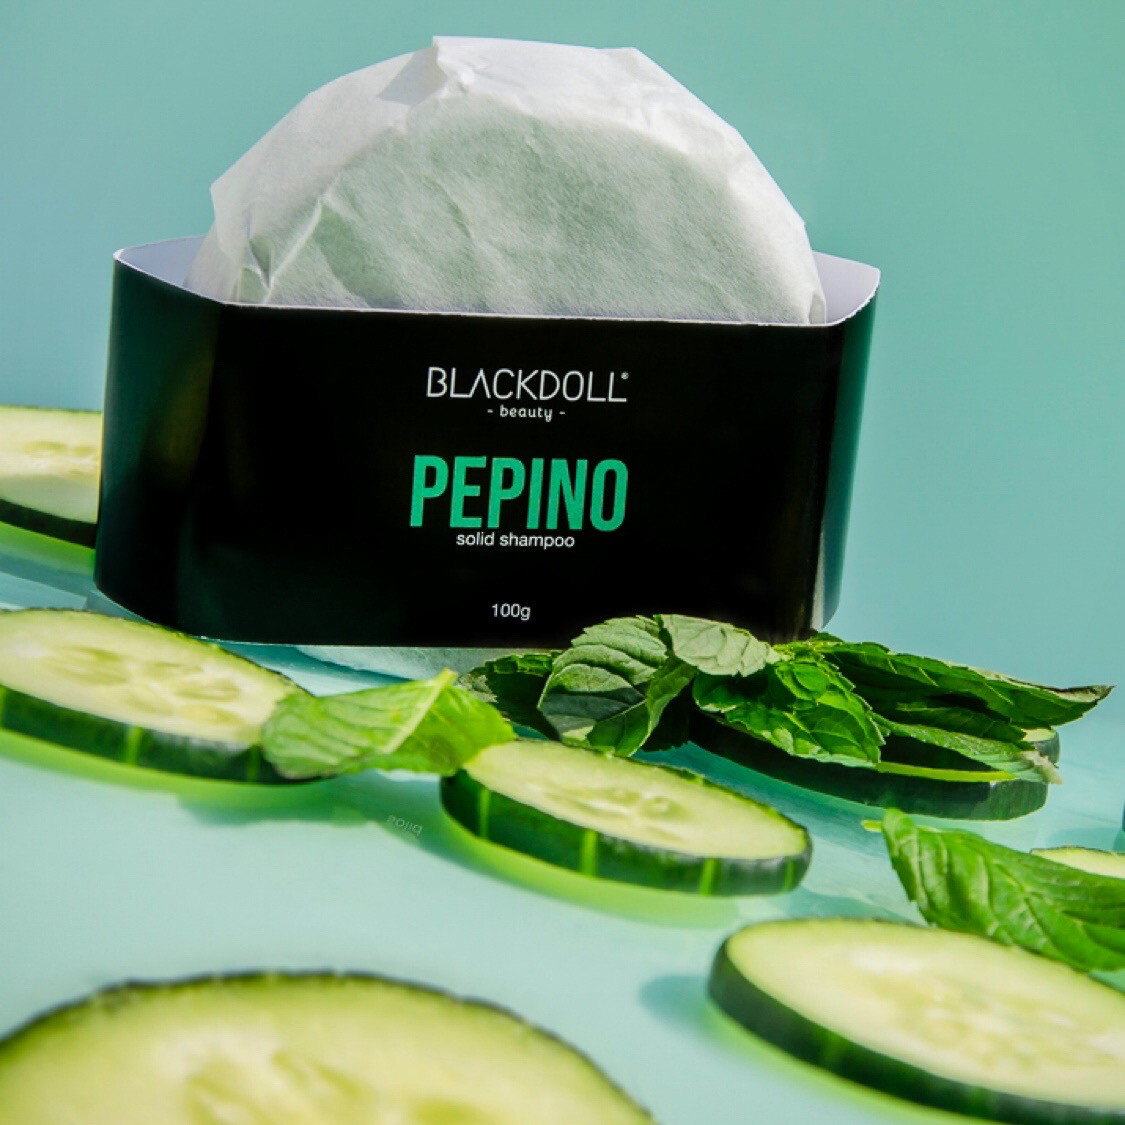 BLACKDOLL BEAUTY - Shampoo Sólido de Pepino Para Cabello Normal, Purificante, AntiFrizz | Solid Shampoo